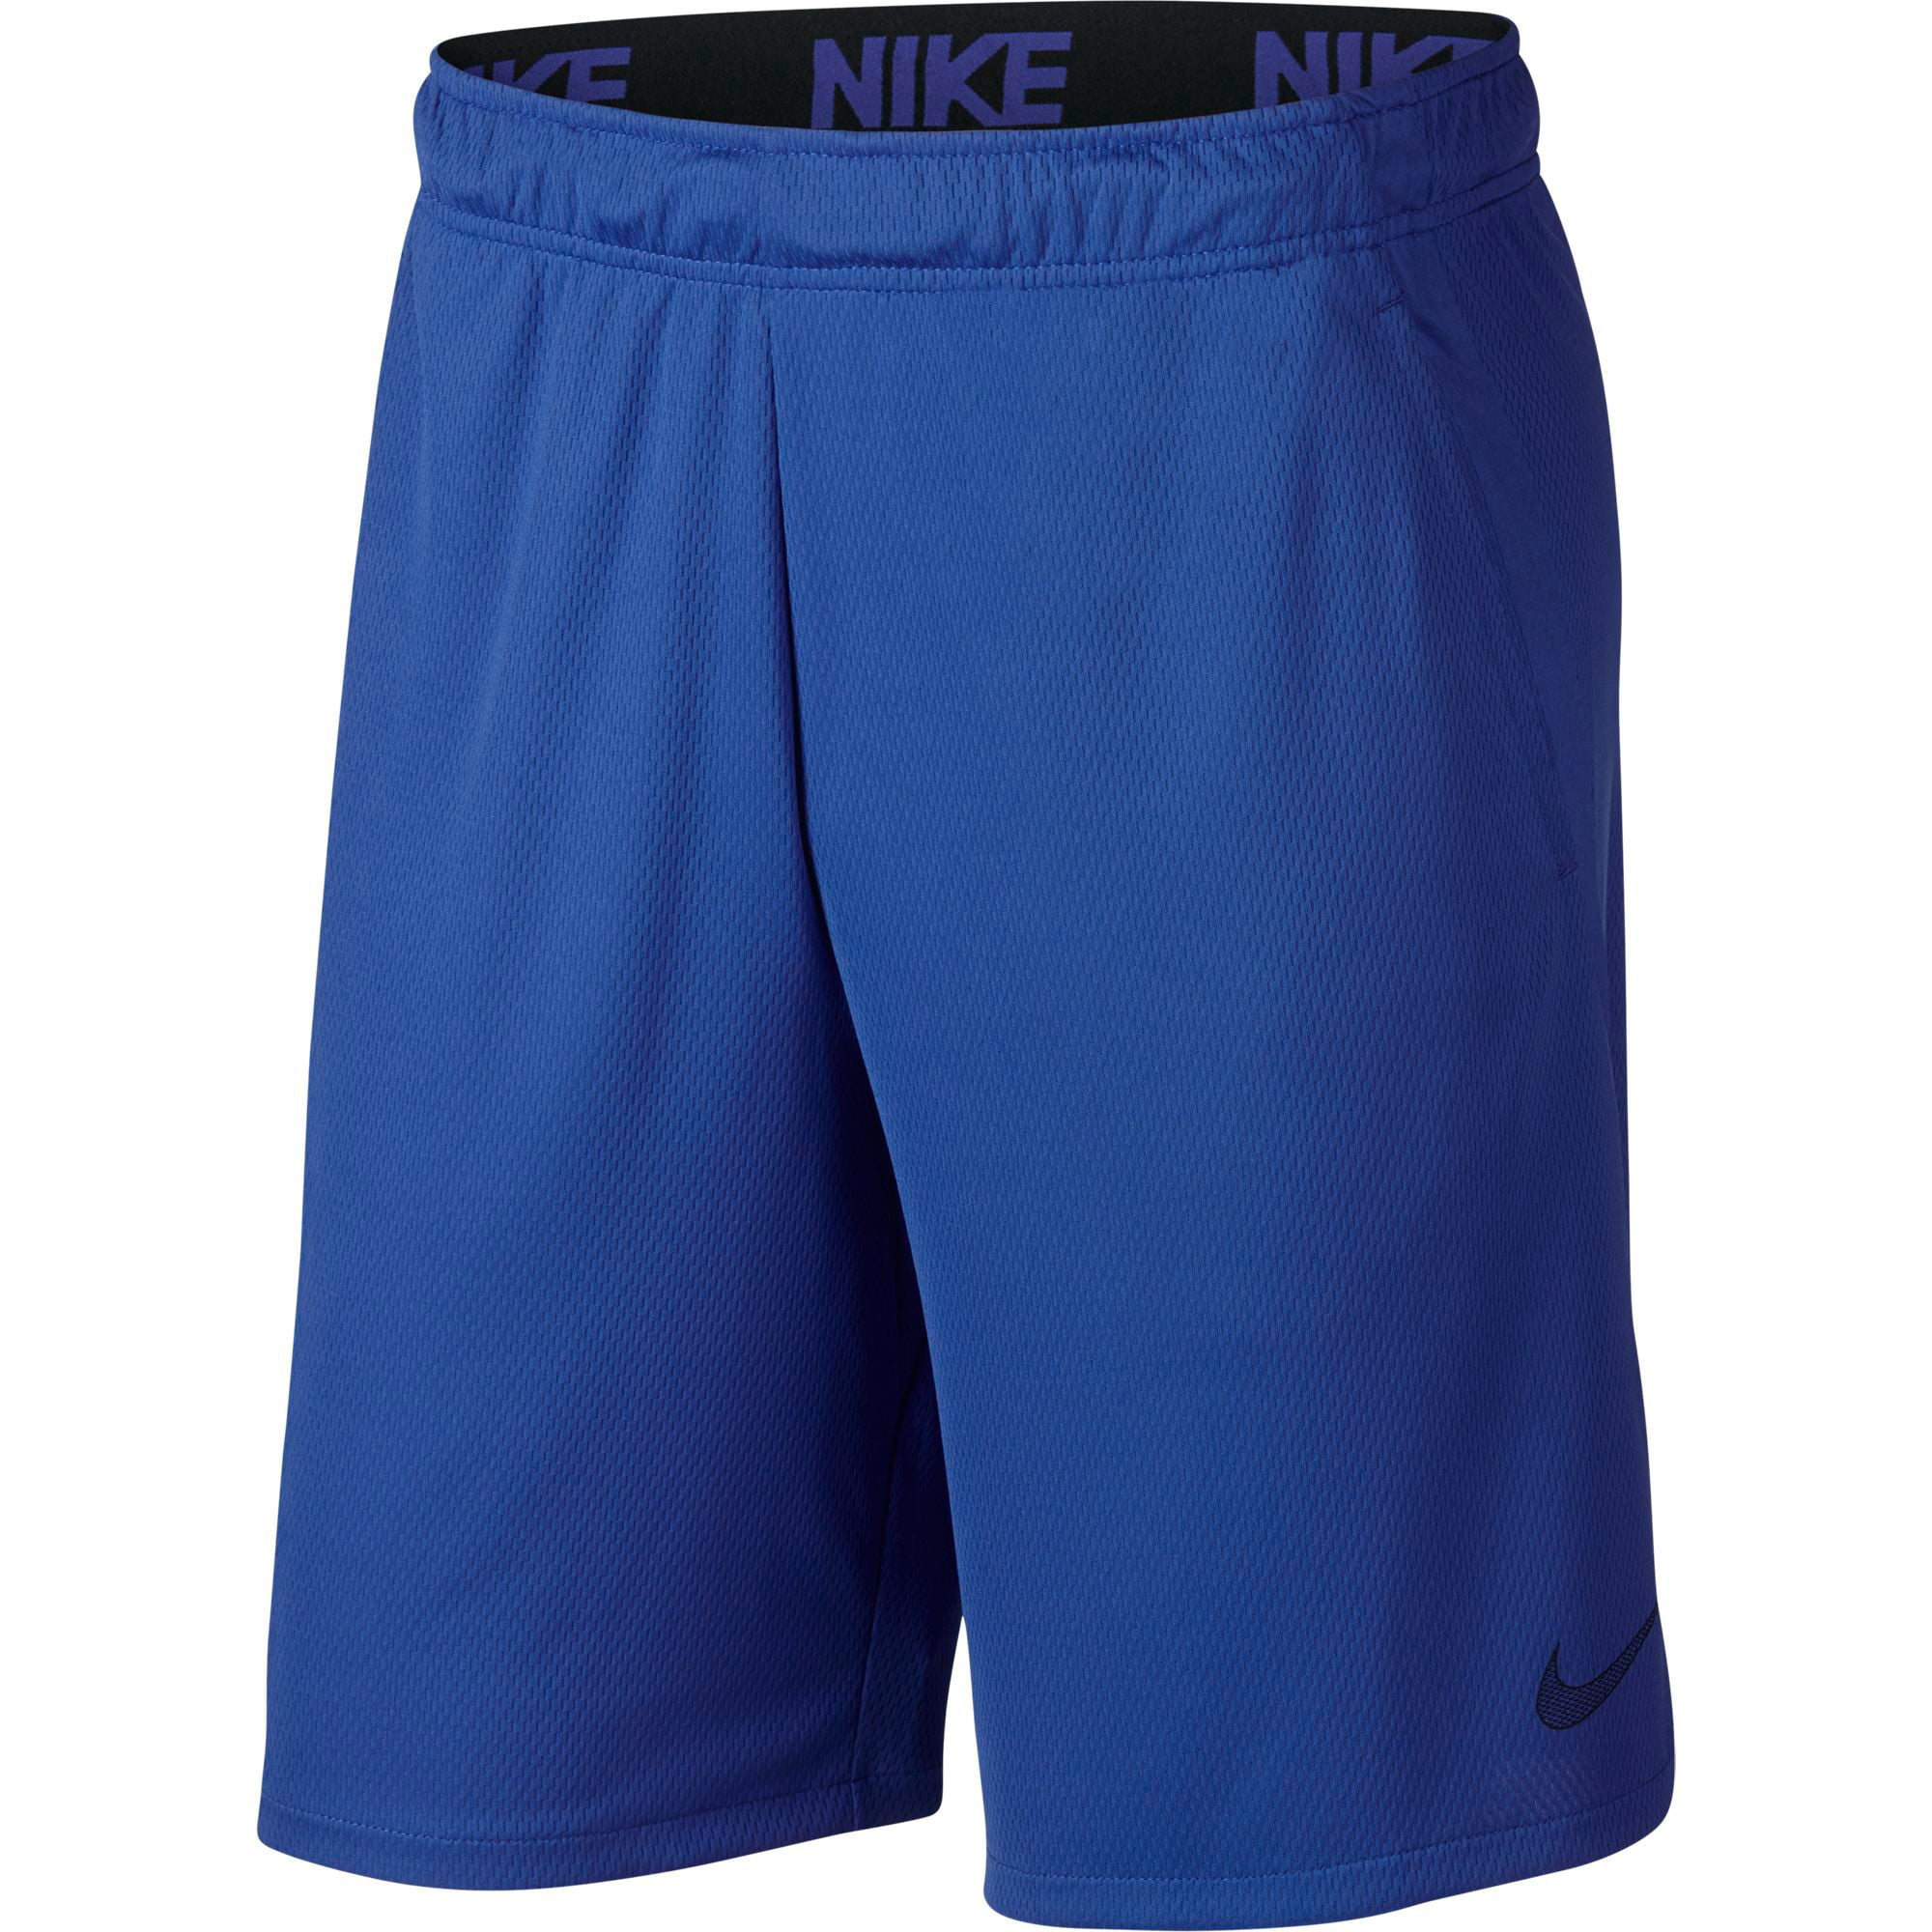 Nike Men's Dry 4.0 Shorts Walmart.com